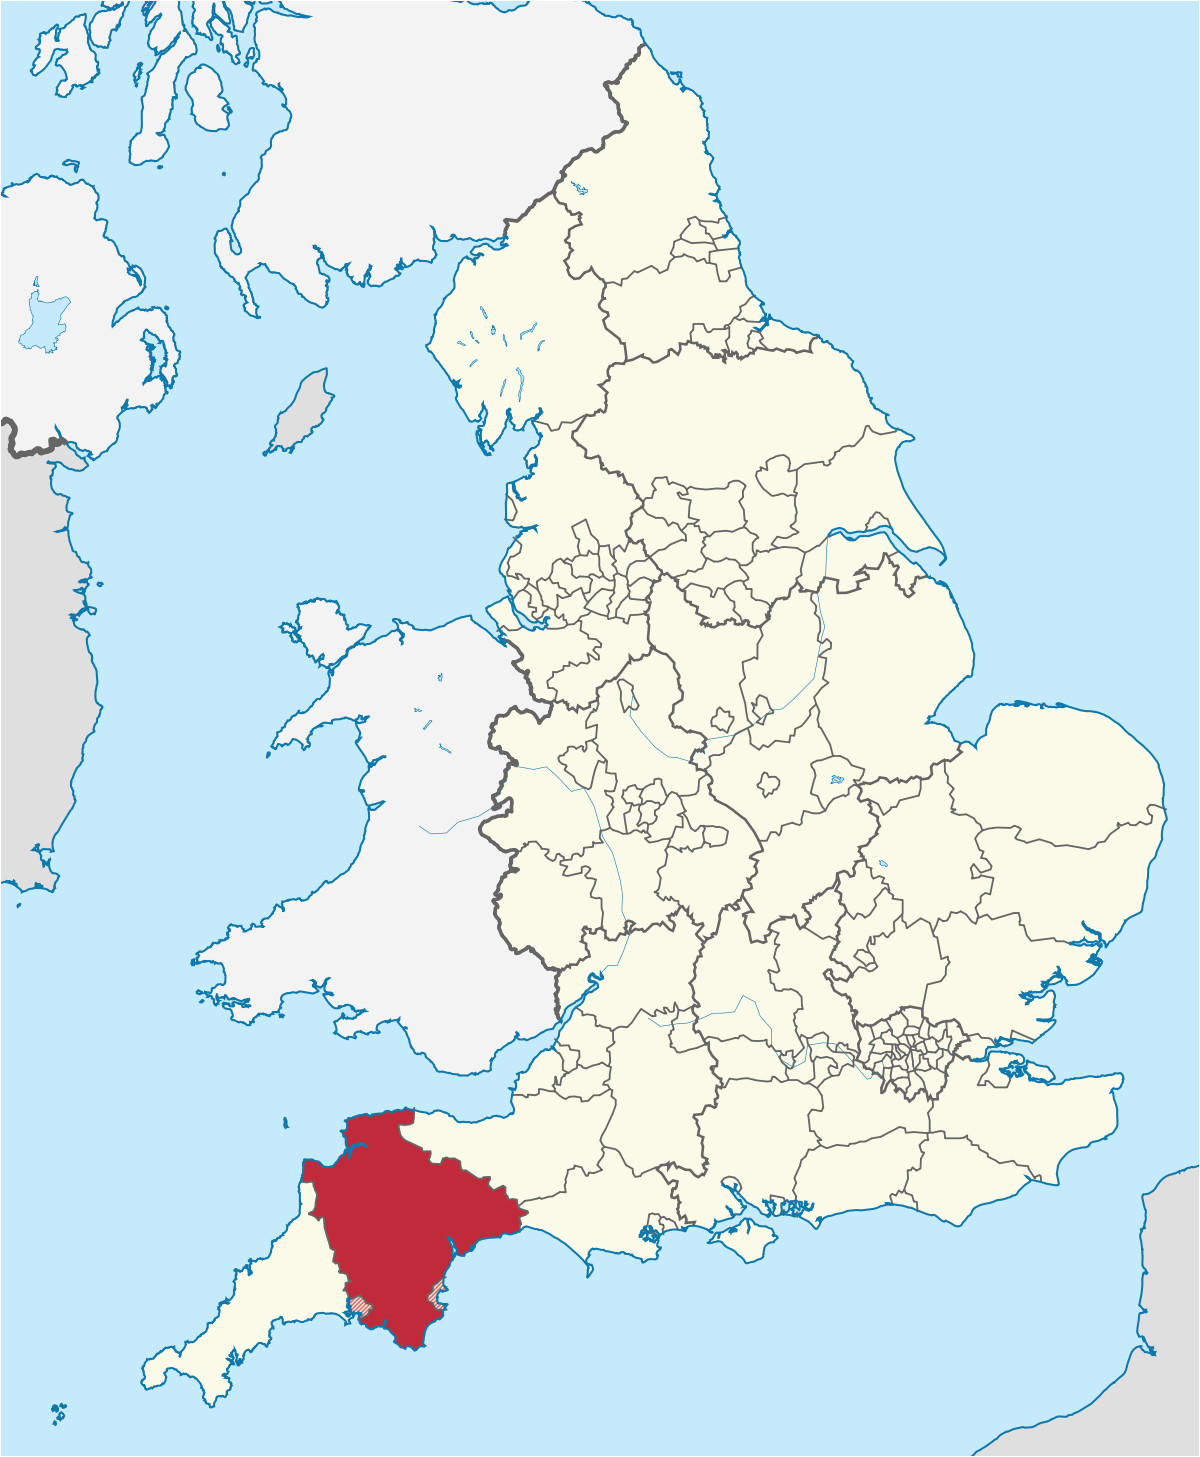 Warrington England Map Devon England Wikipedia